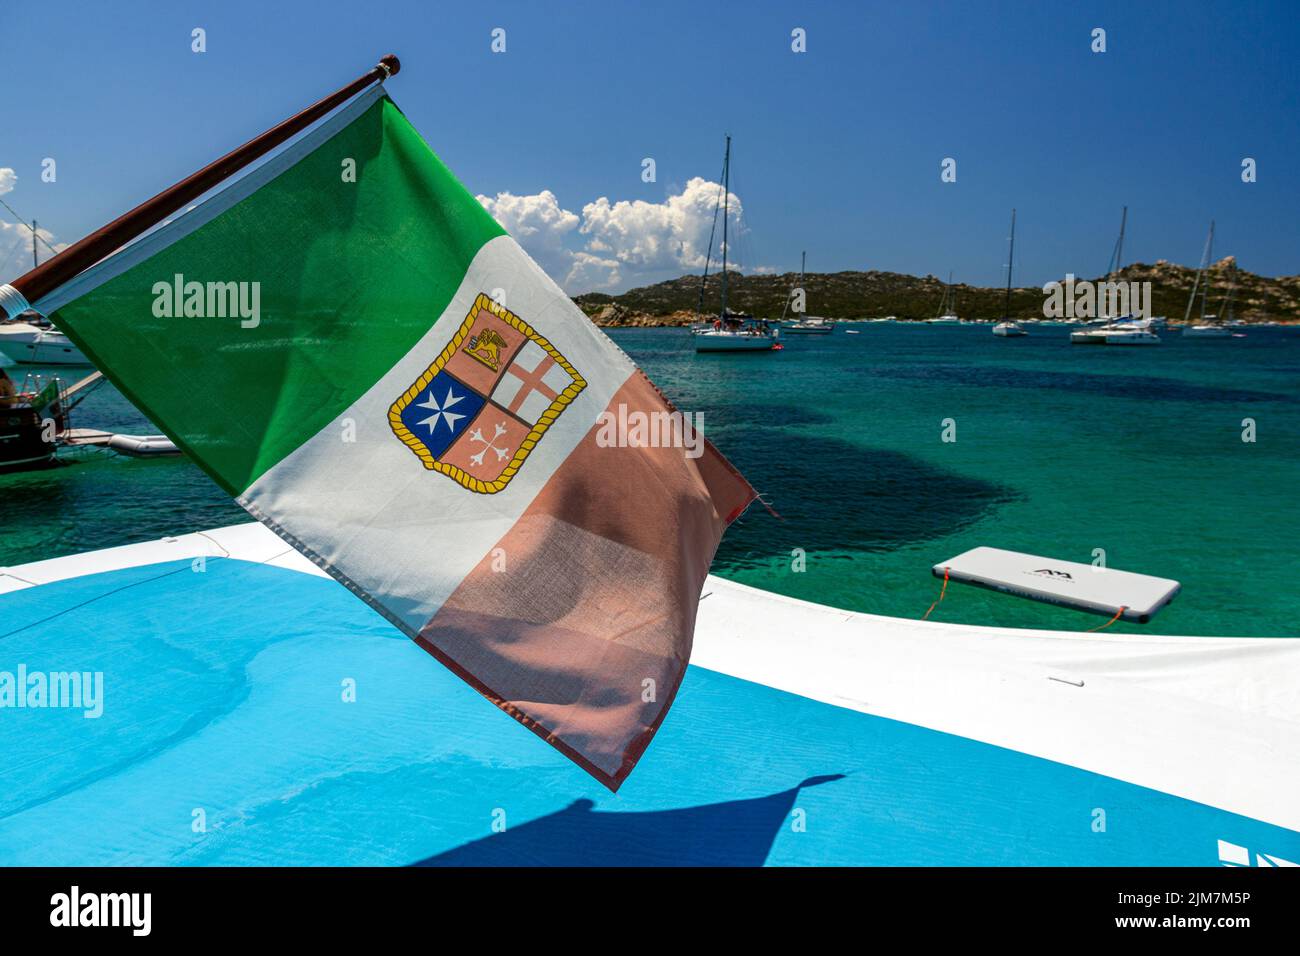 Bandera italiana Náutica Civil Ensign, Archipiélago de Maddalena Foto de stock